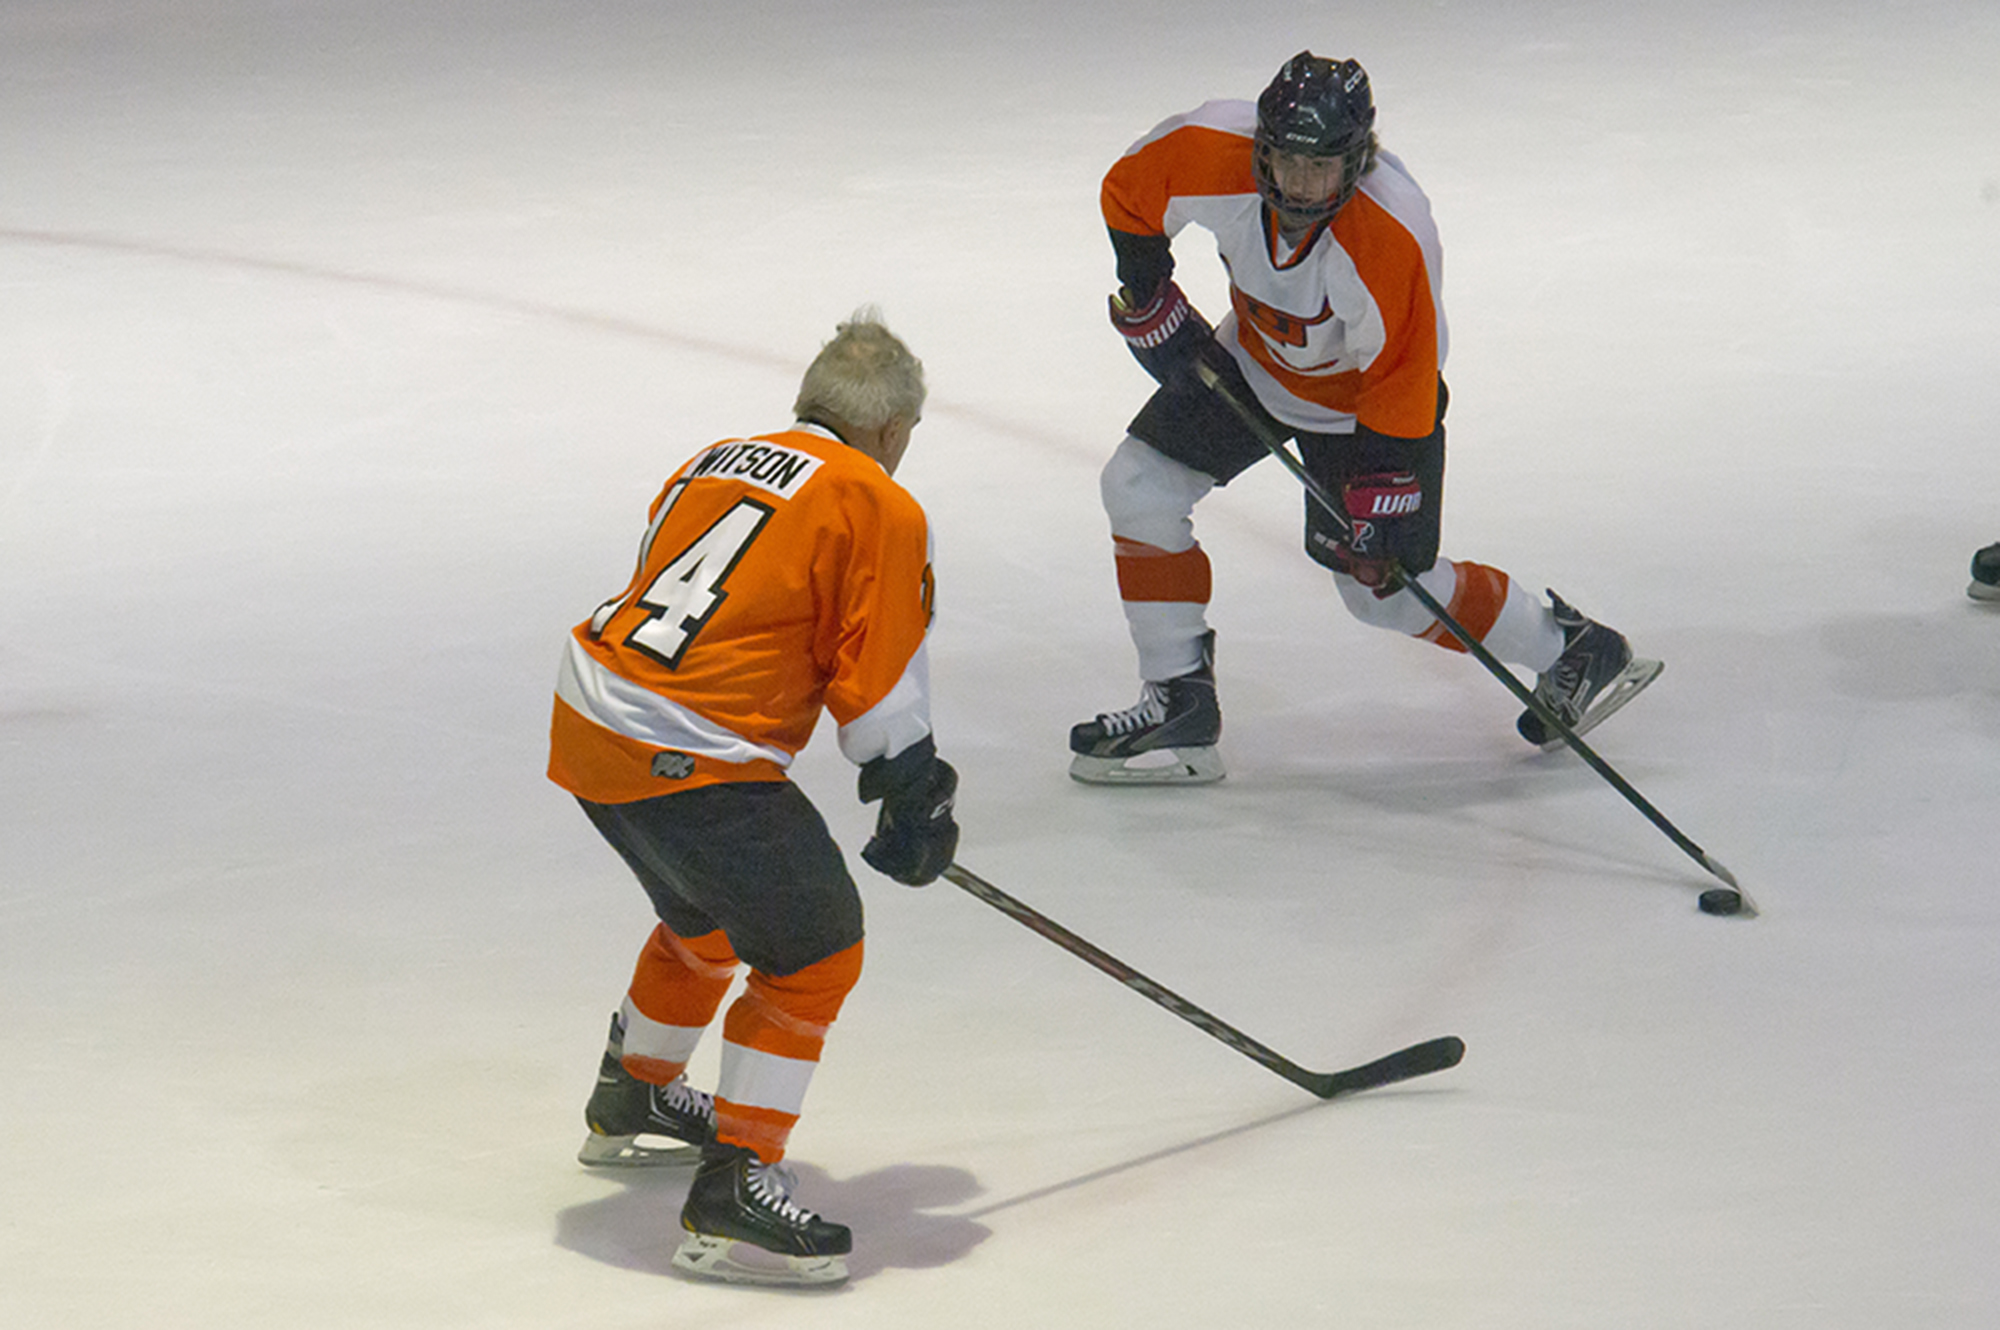 A Flyers alum on ice against a Snider team player